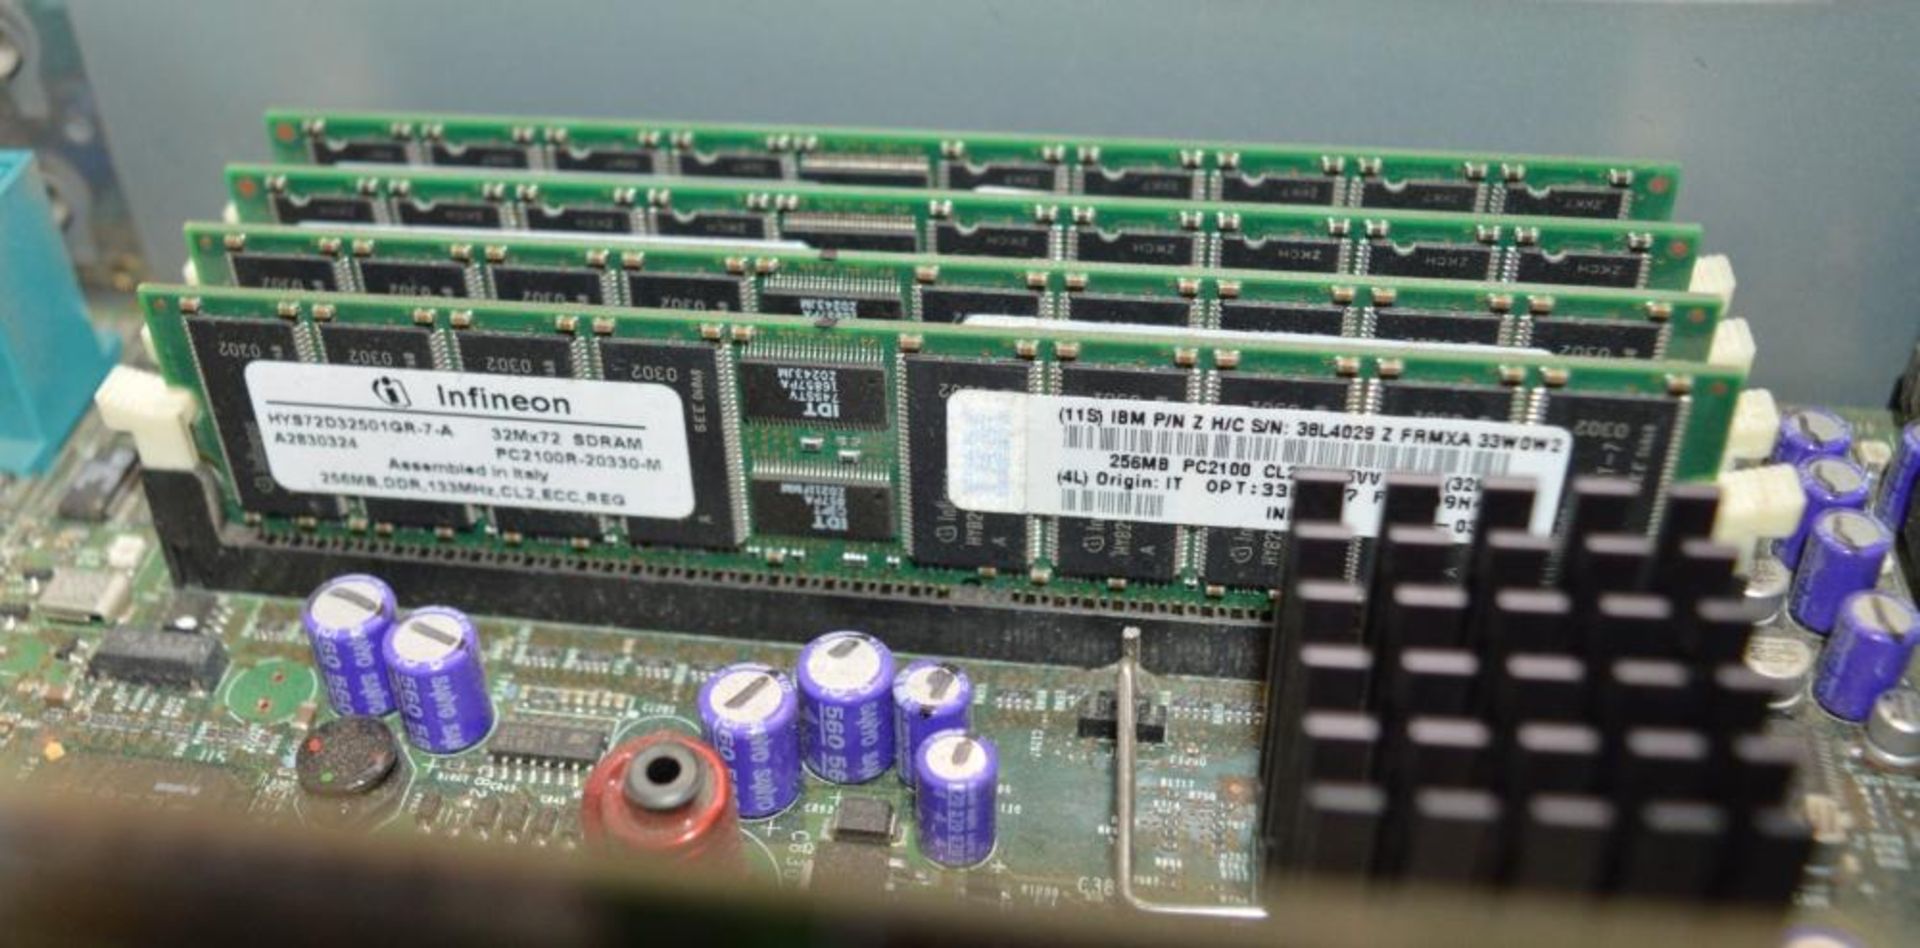 1 x IBM xSeries 345 Server - Includes Dual Xeon Processors, 1gb Ram, Raid Card - Hard Disk Drives - Image 6 of 8